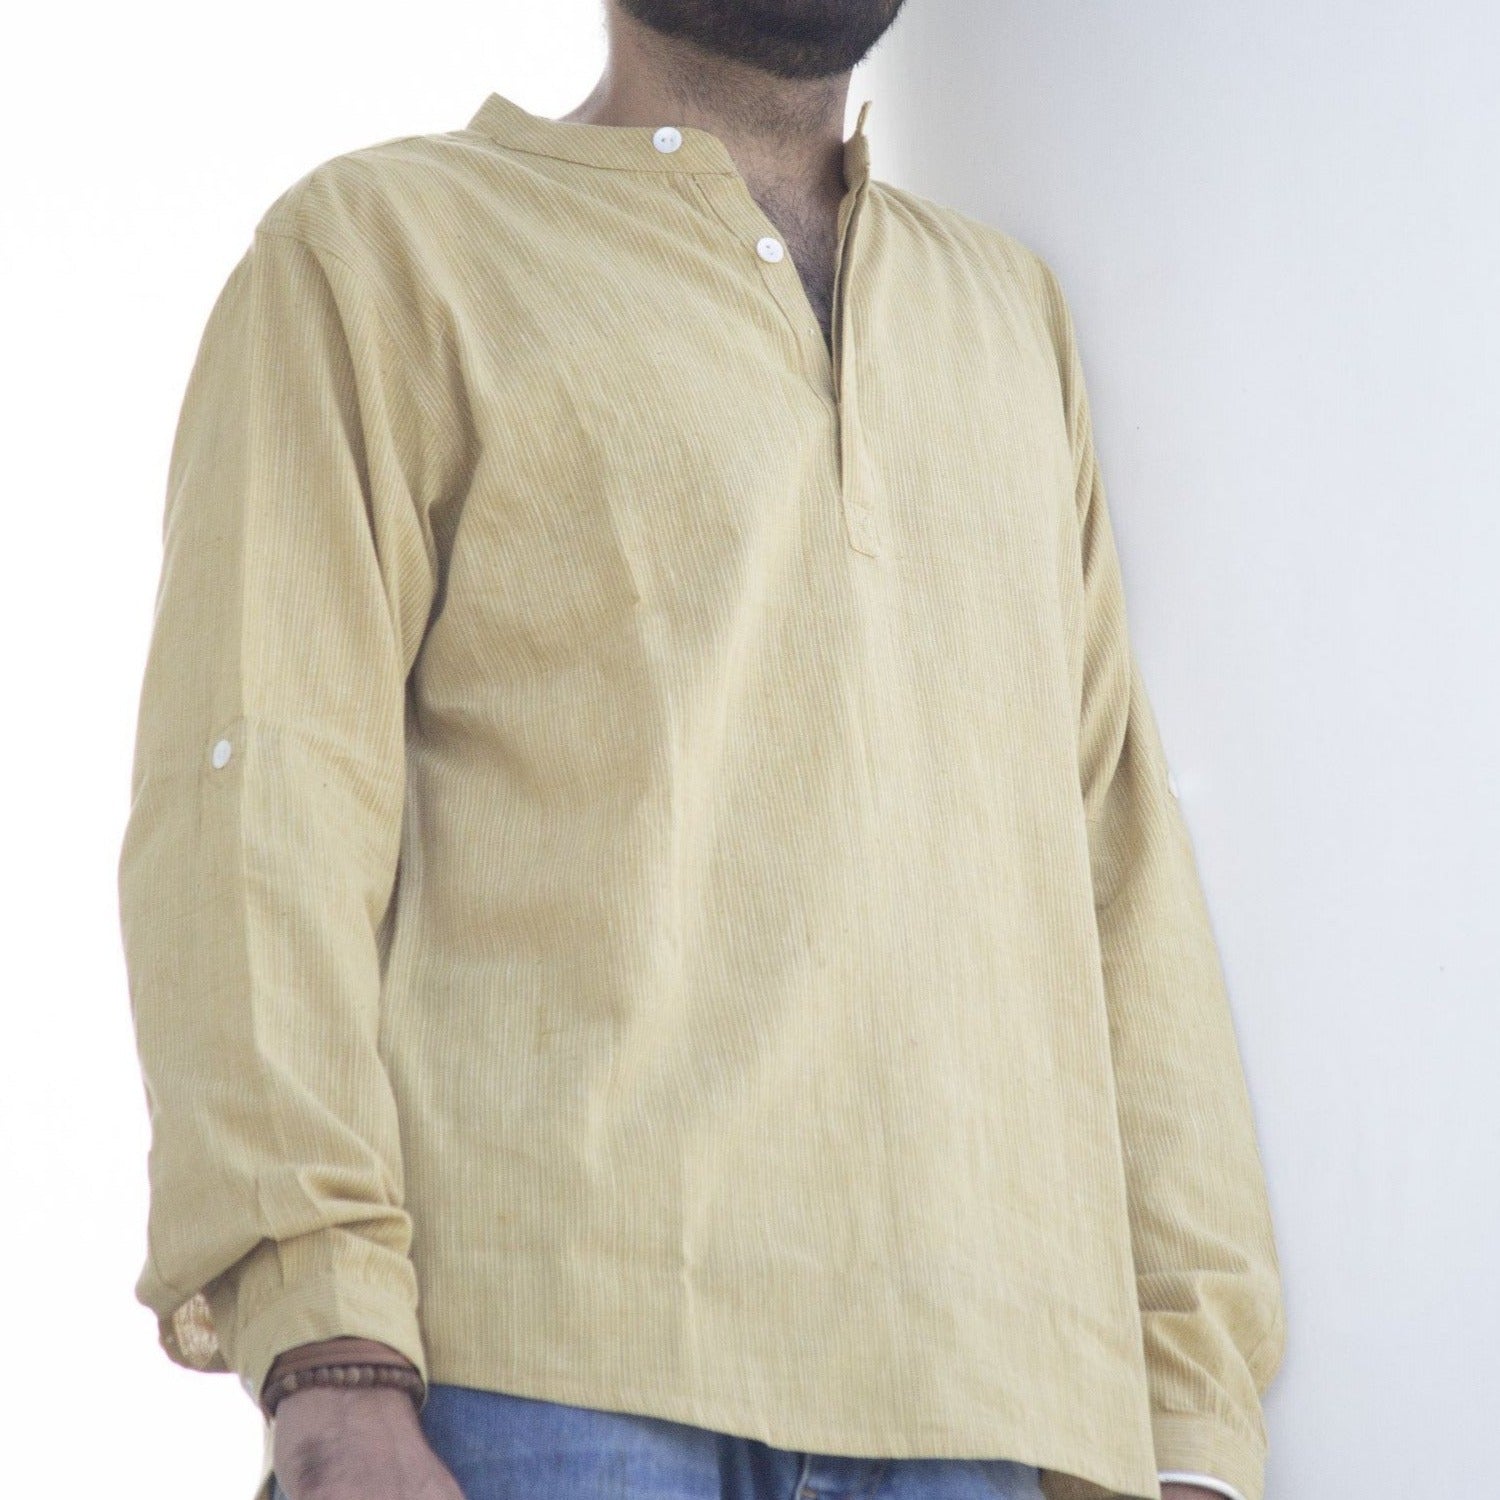 Malkha Handspun Cotton Unisex Shirt Desert Yellow Stripes Wearable Stitched Garment Textile  Weaving